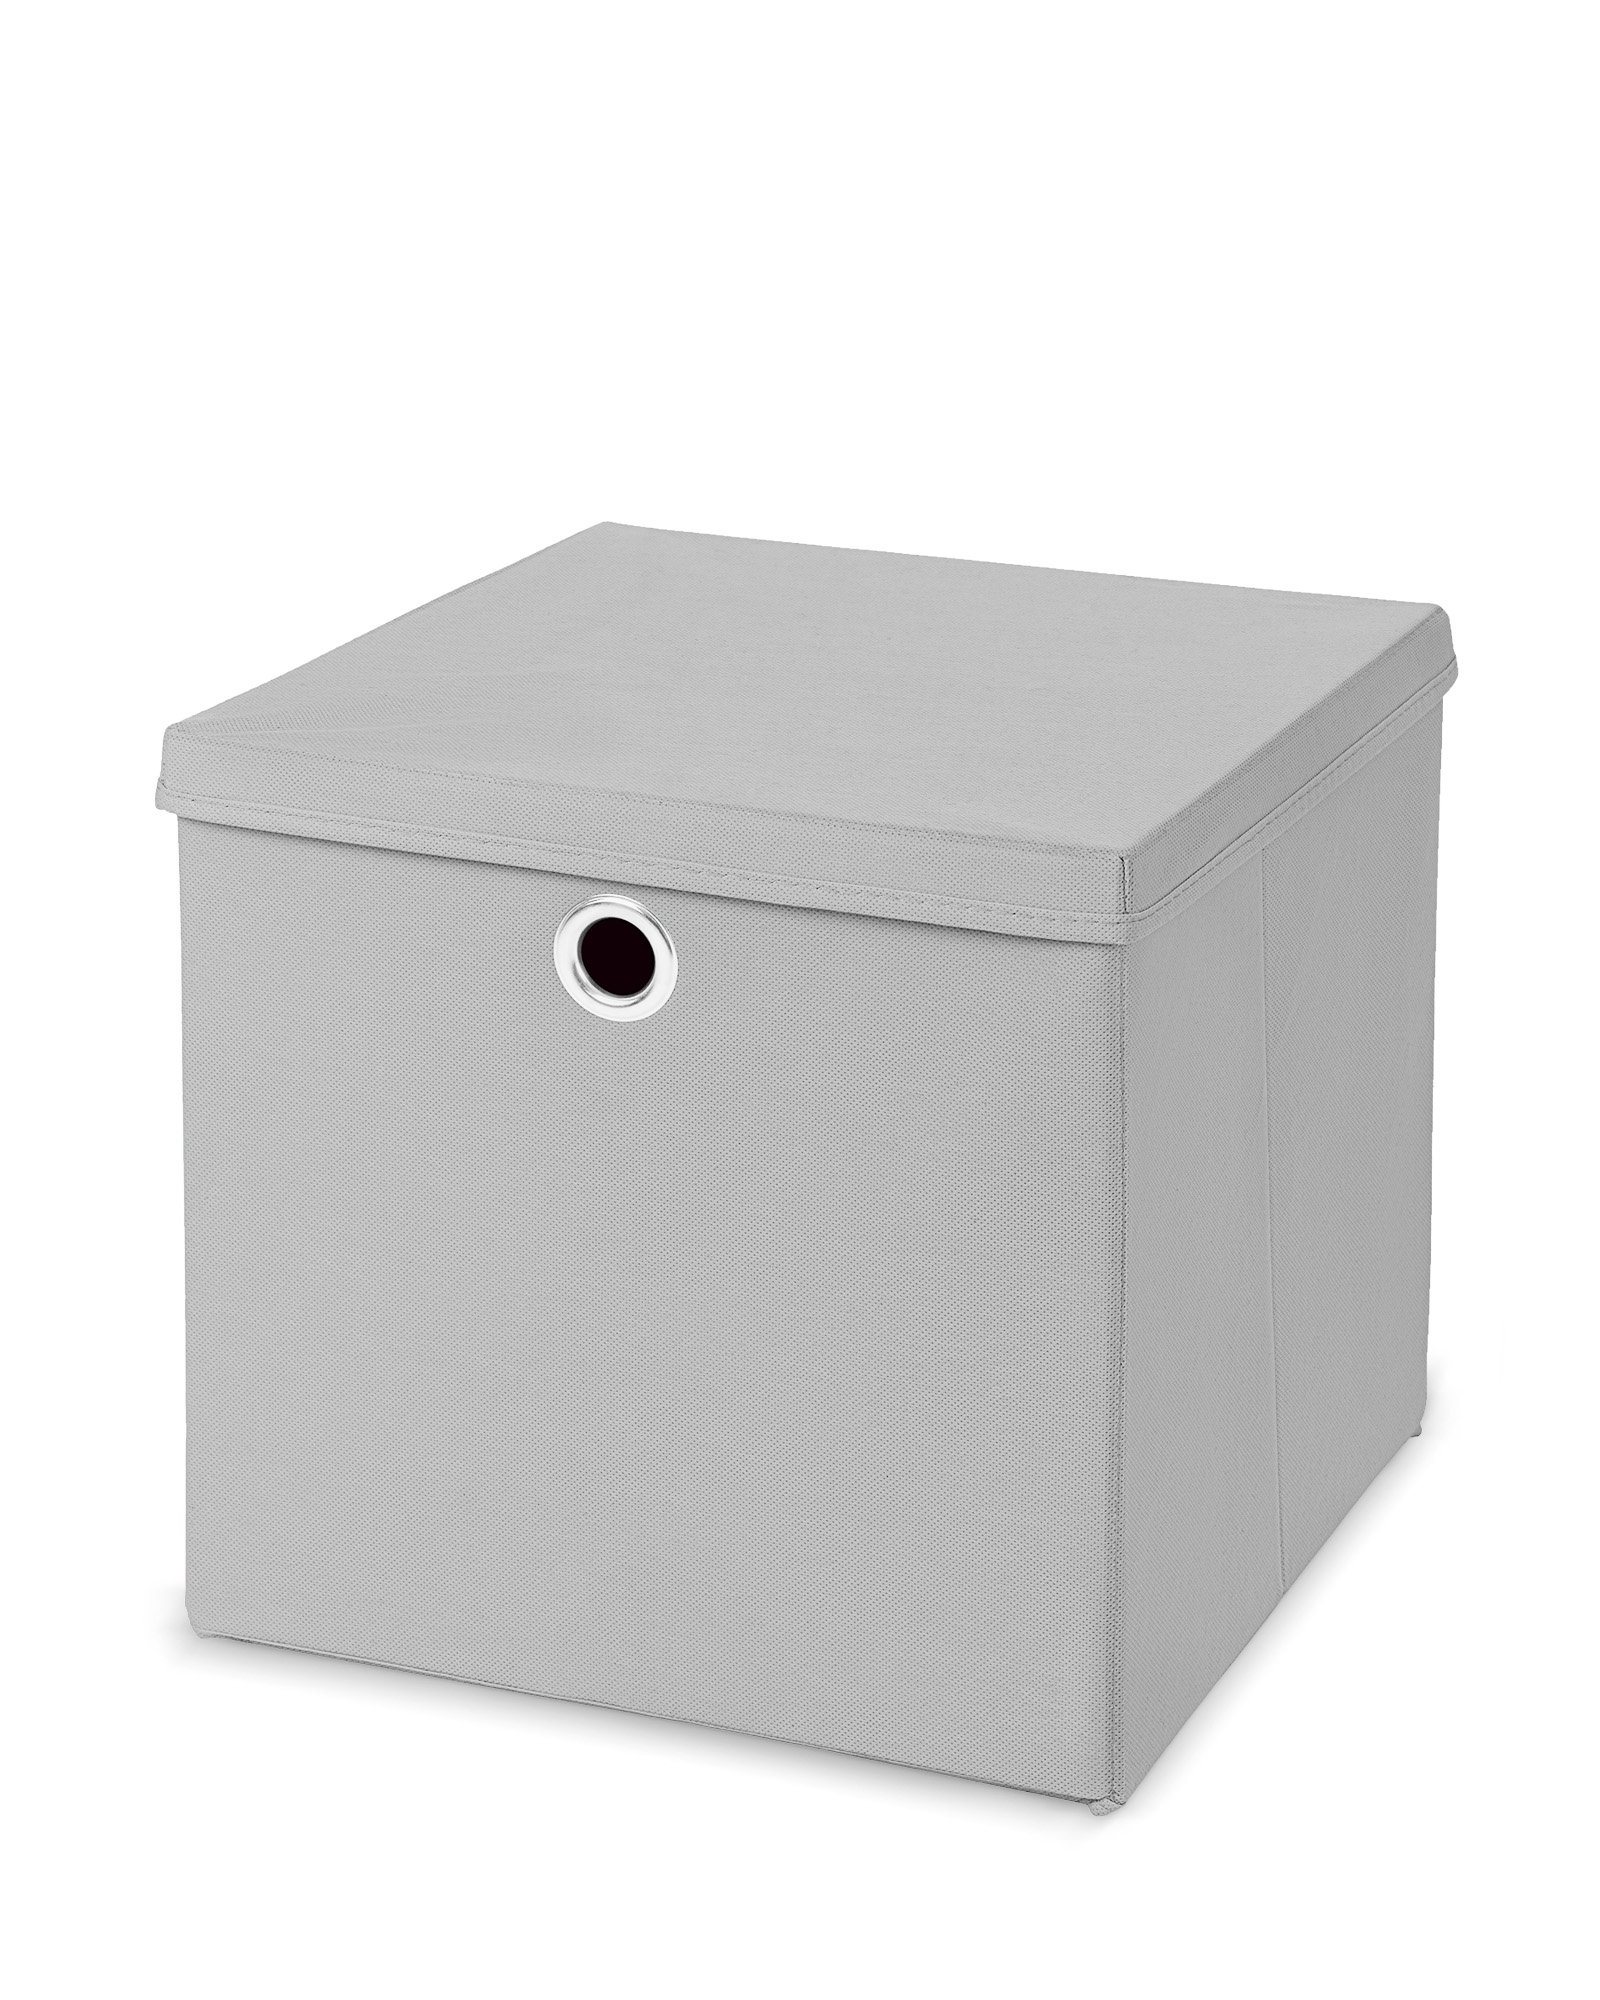 Faltbox mit Deckel, grau, 400 x 300 x 320 mm - EMPORO